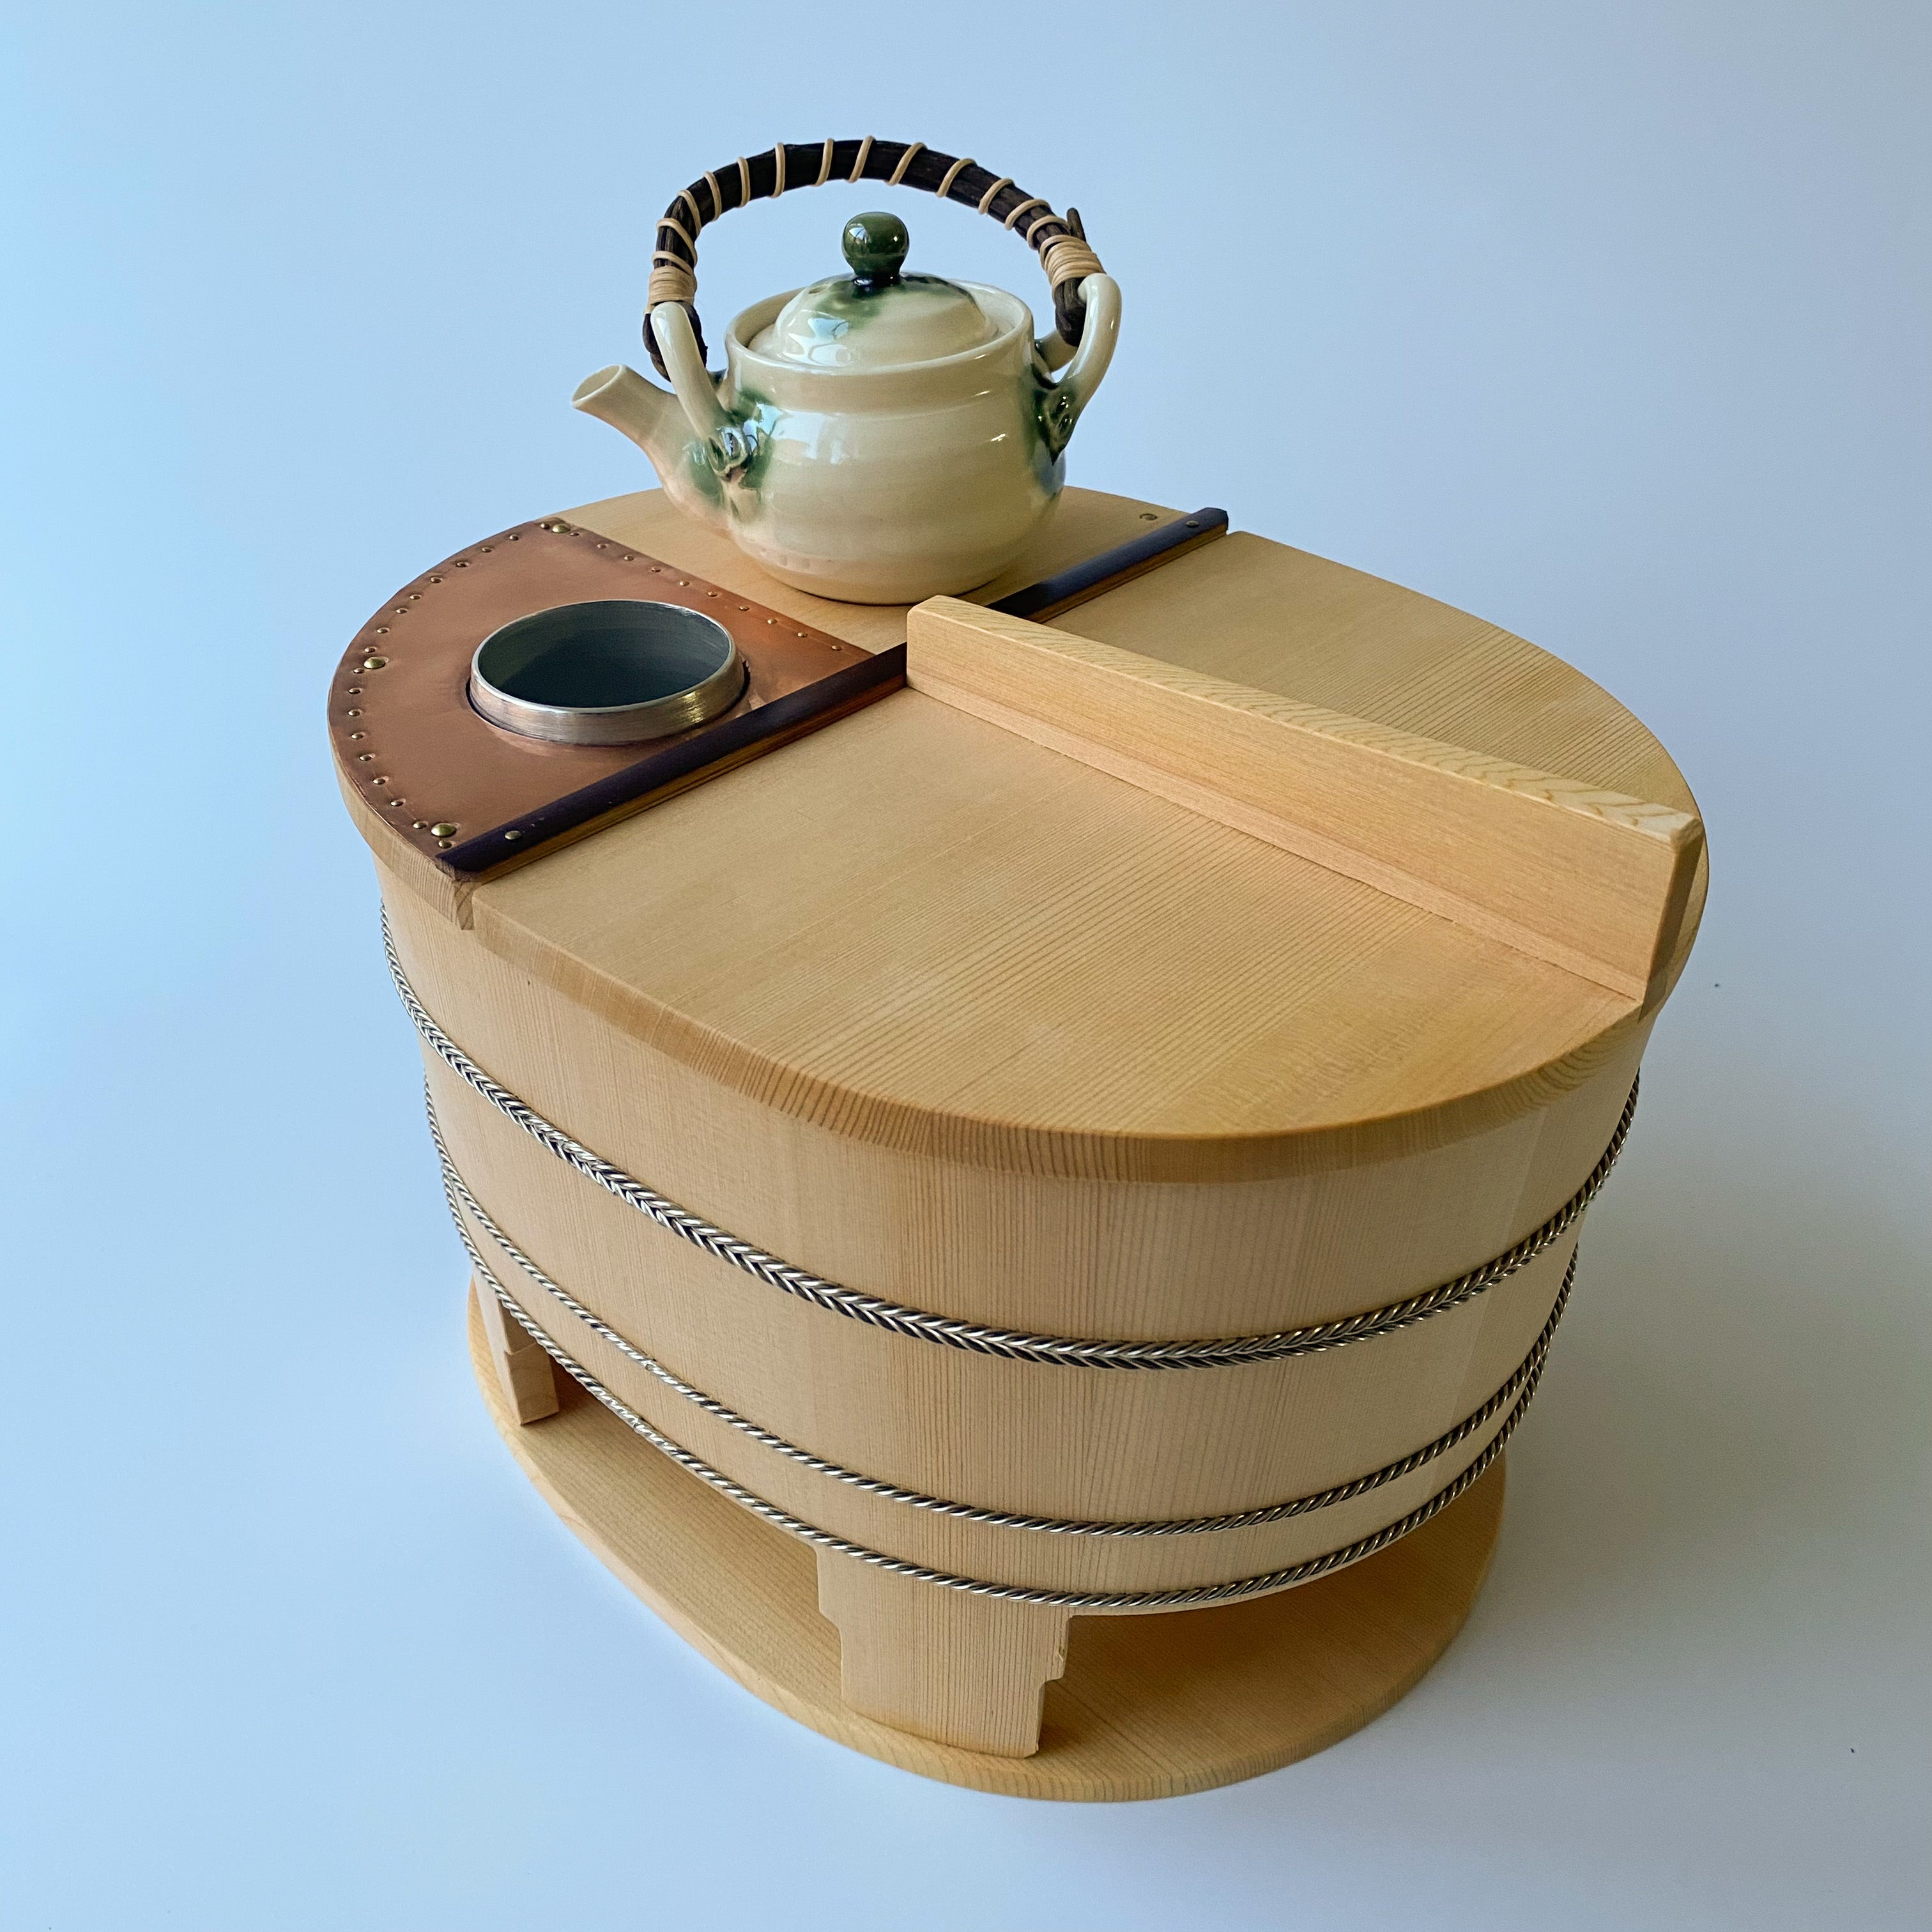 たる源】湯豆腐 京都 伝統工芸品 - 食器